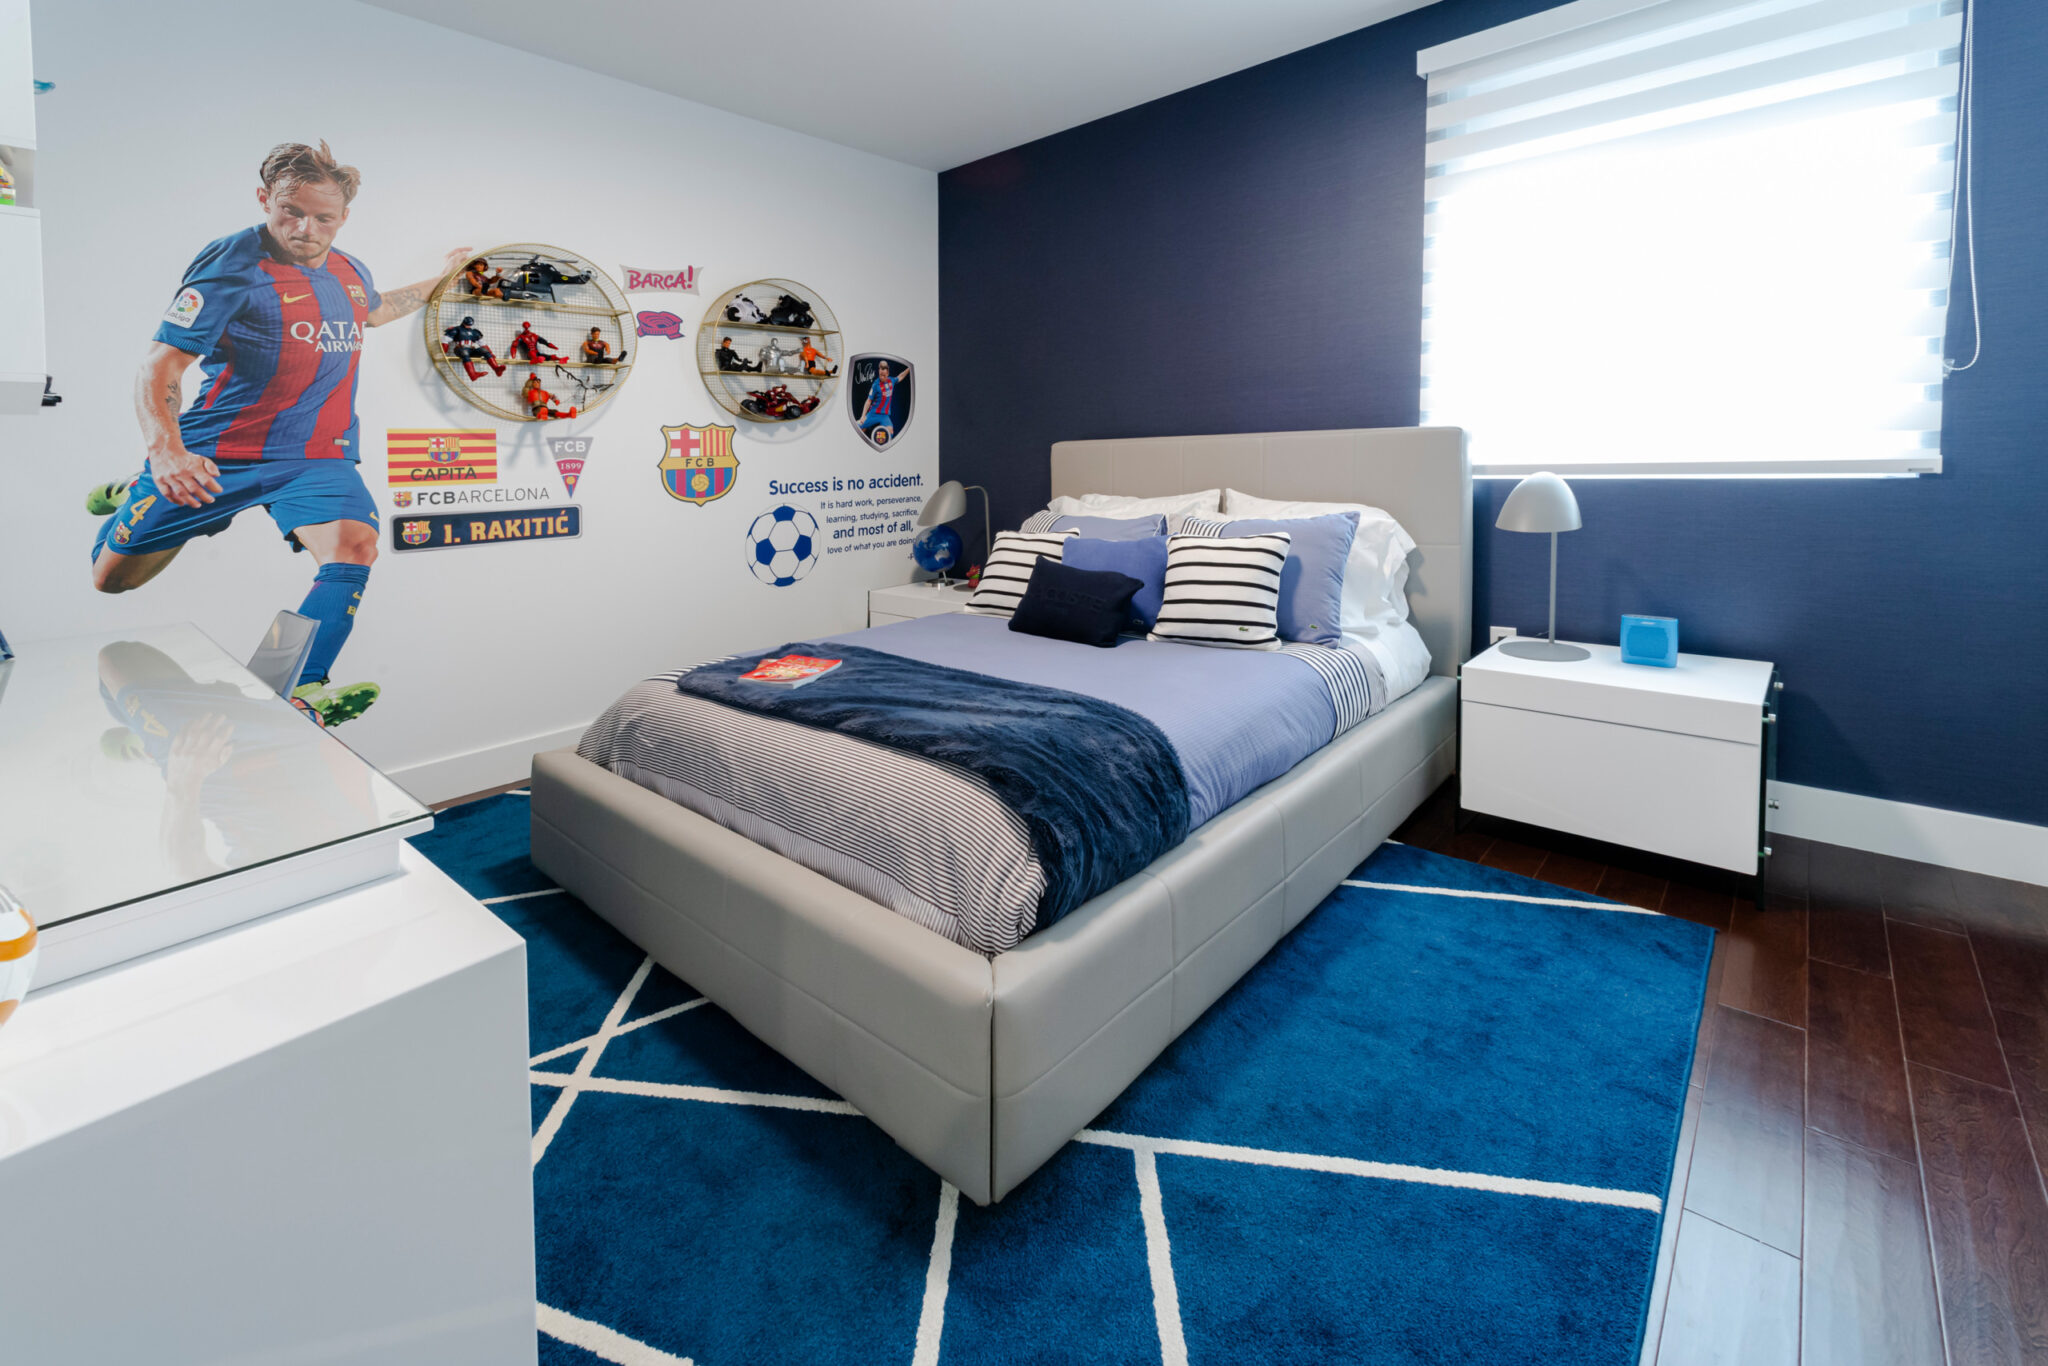 Get Inspired with These Trending Teen Bedroom Ideas - HouzEdit